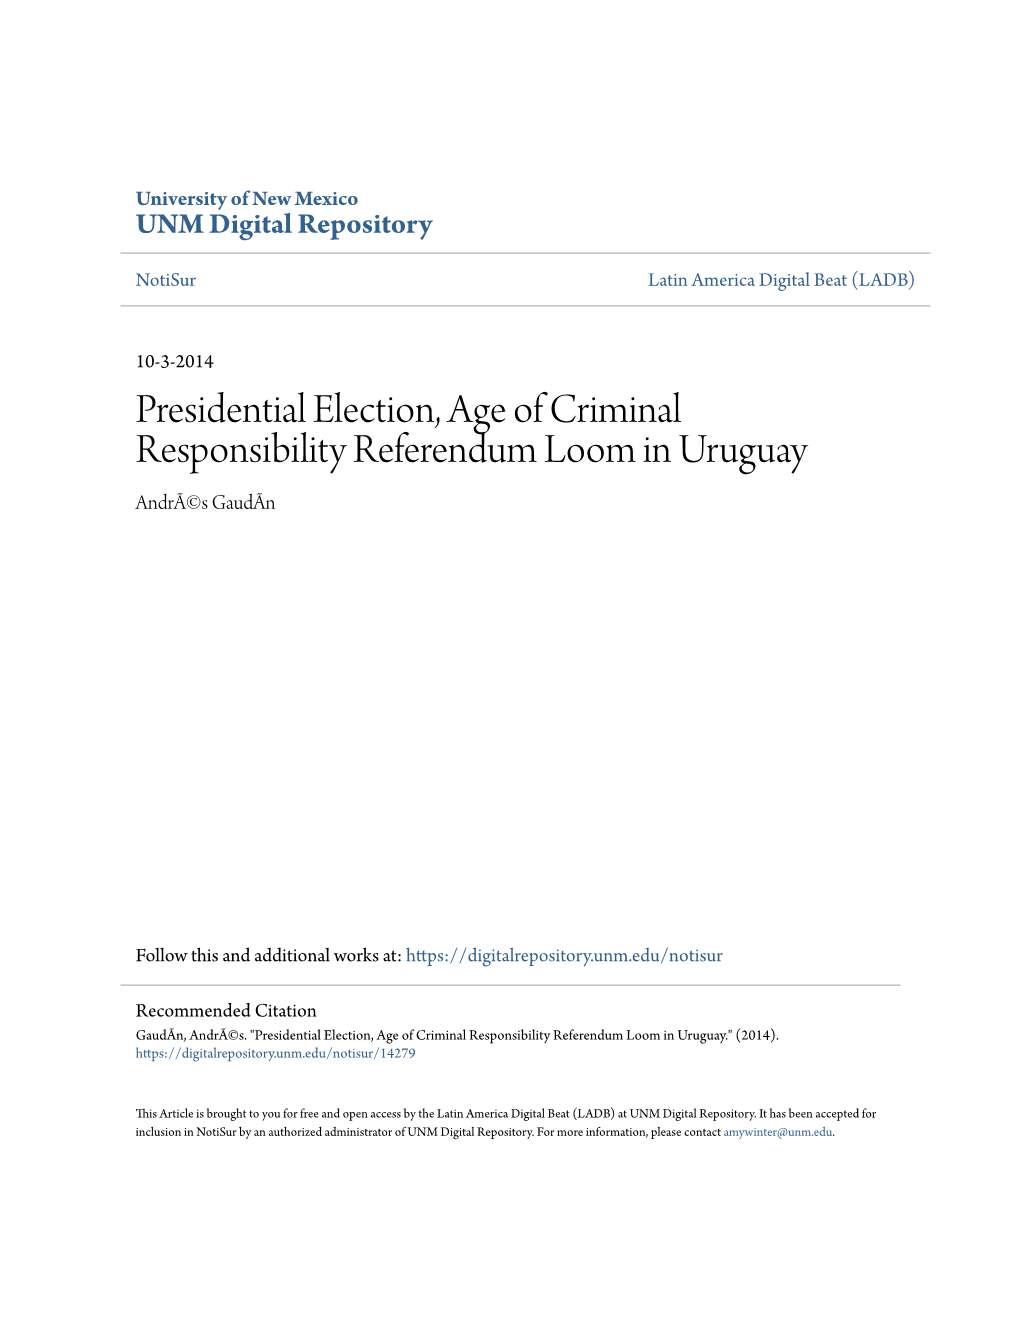 Presidential Election, Age of Criminal Responsibility Referendum Loom in Uruguay Andrã©S Gaudãn